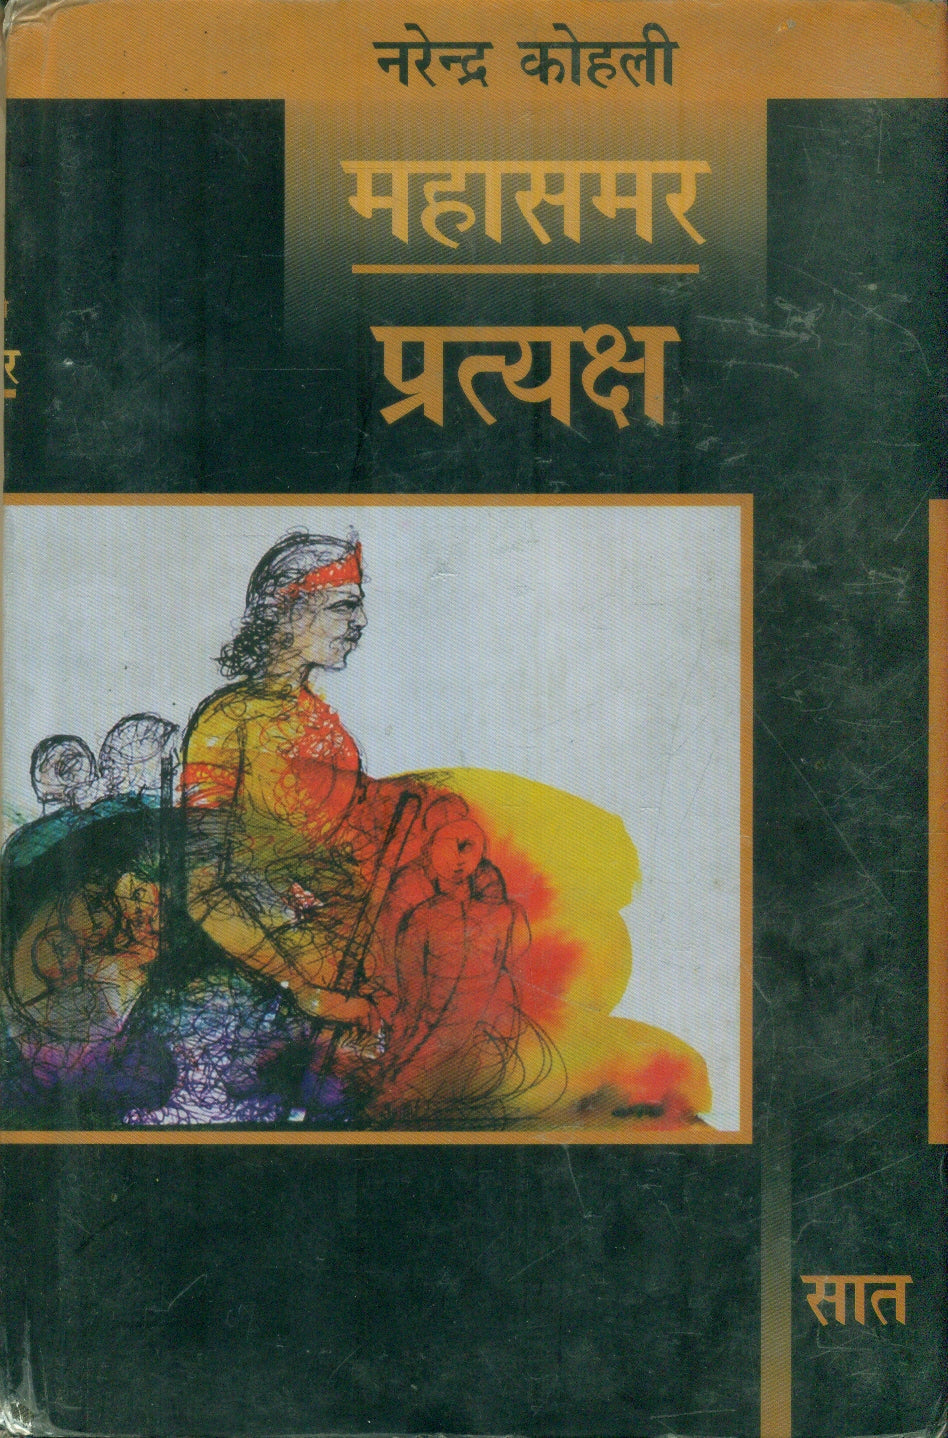 Pratyaksh : Mahasamar7 (Deluxe Edition)